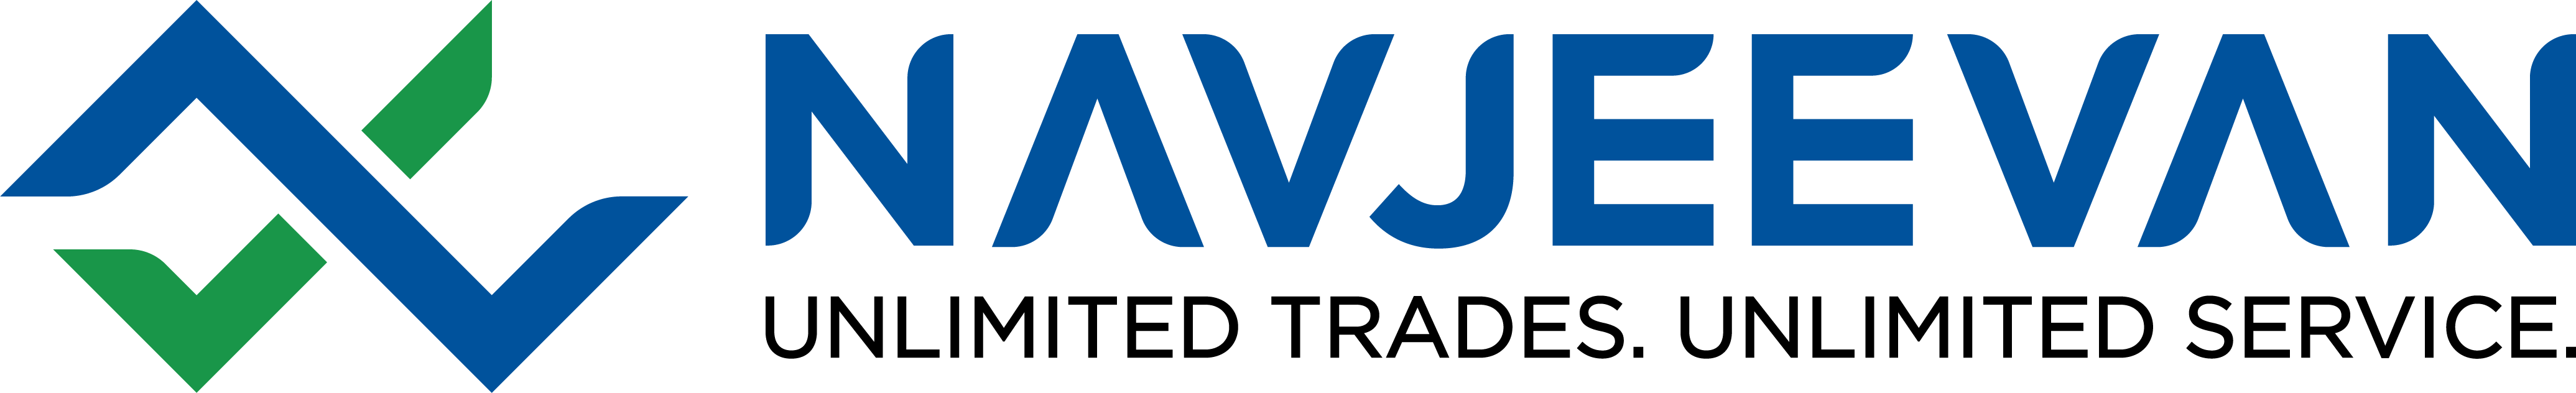 Navjeevan-logo